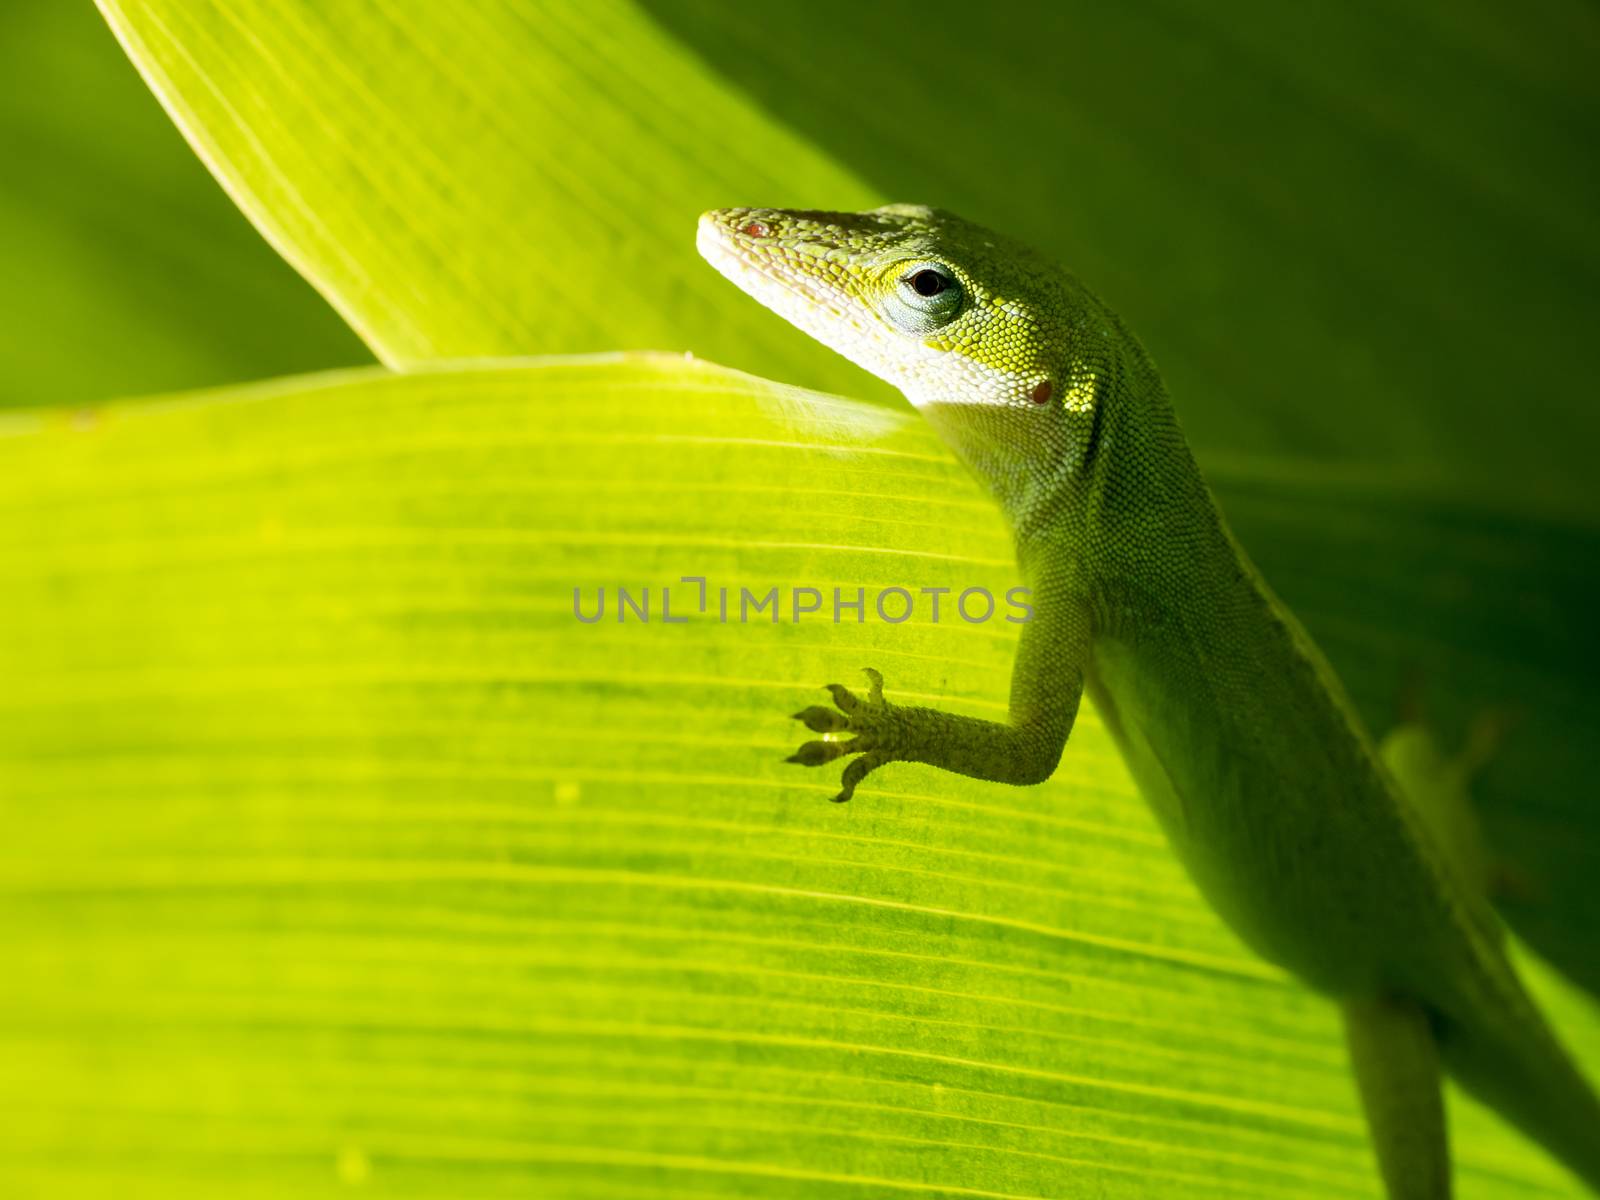 Closeup to a green lizard